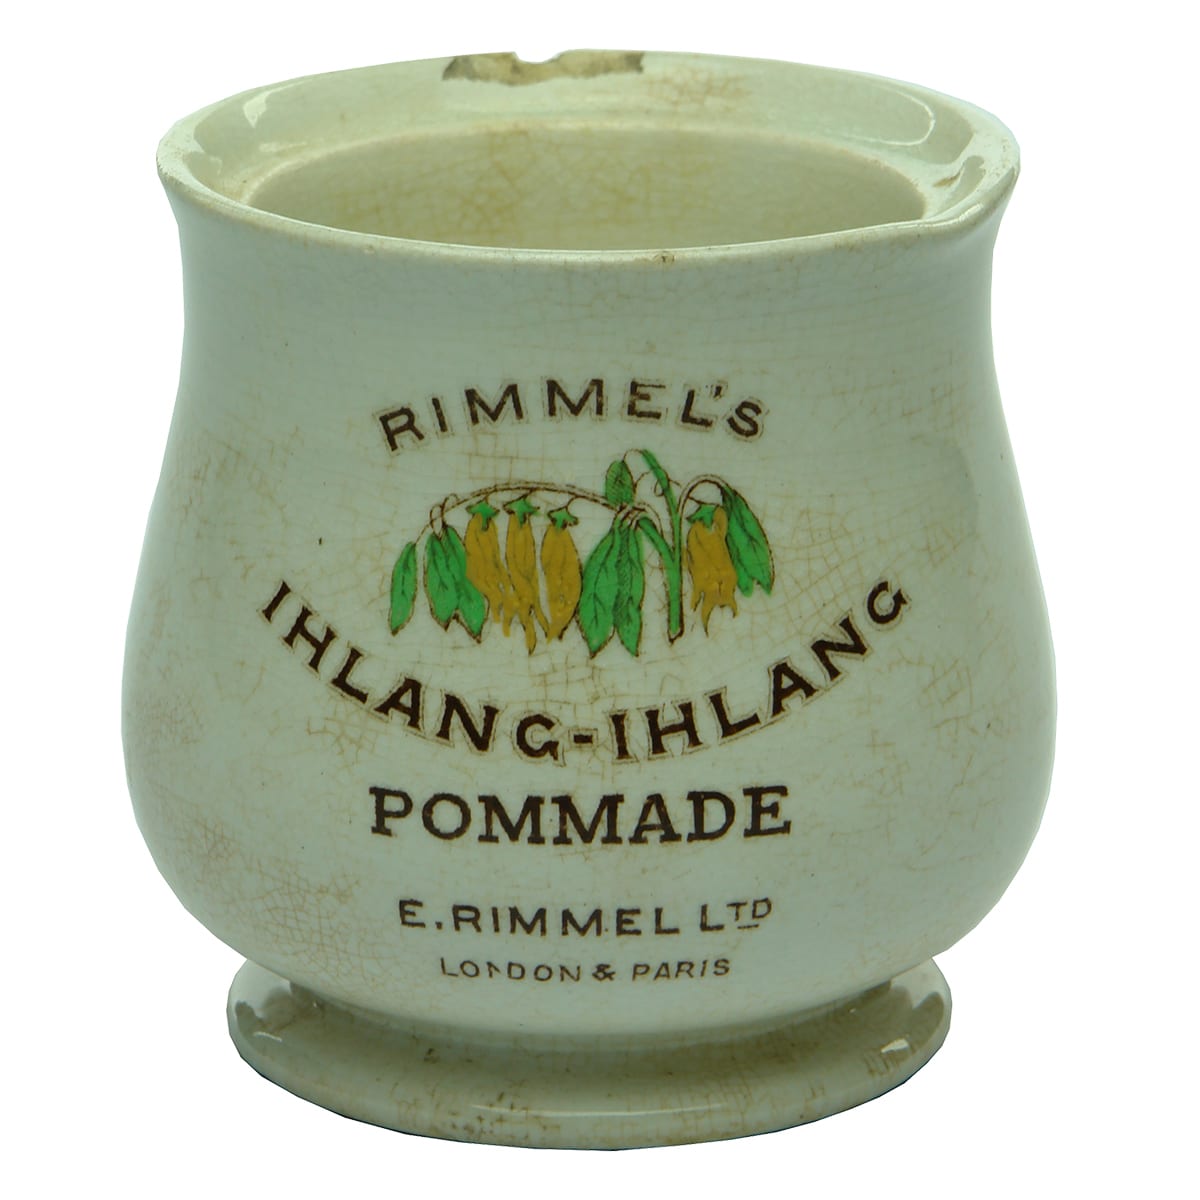 Ceramic Cosmetics Jar. Rimmel's Ihlang-Ihlang Pommade.